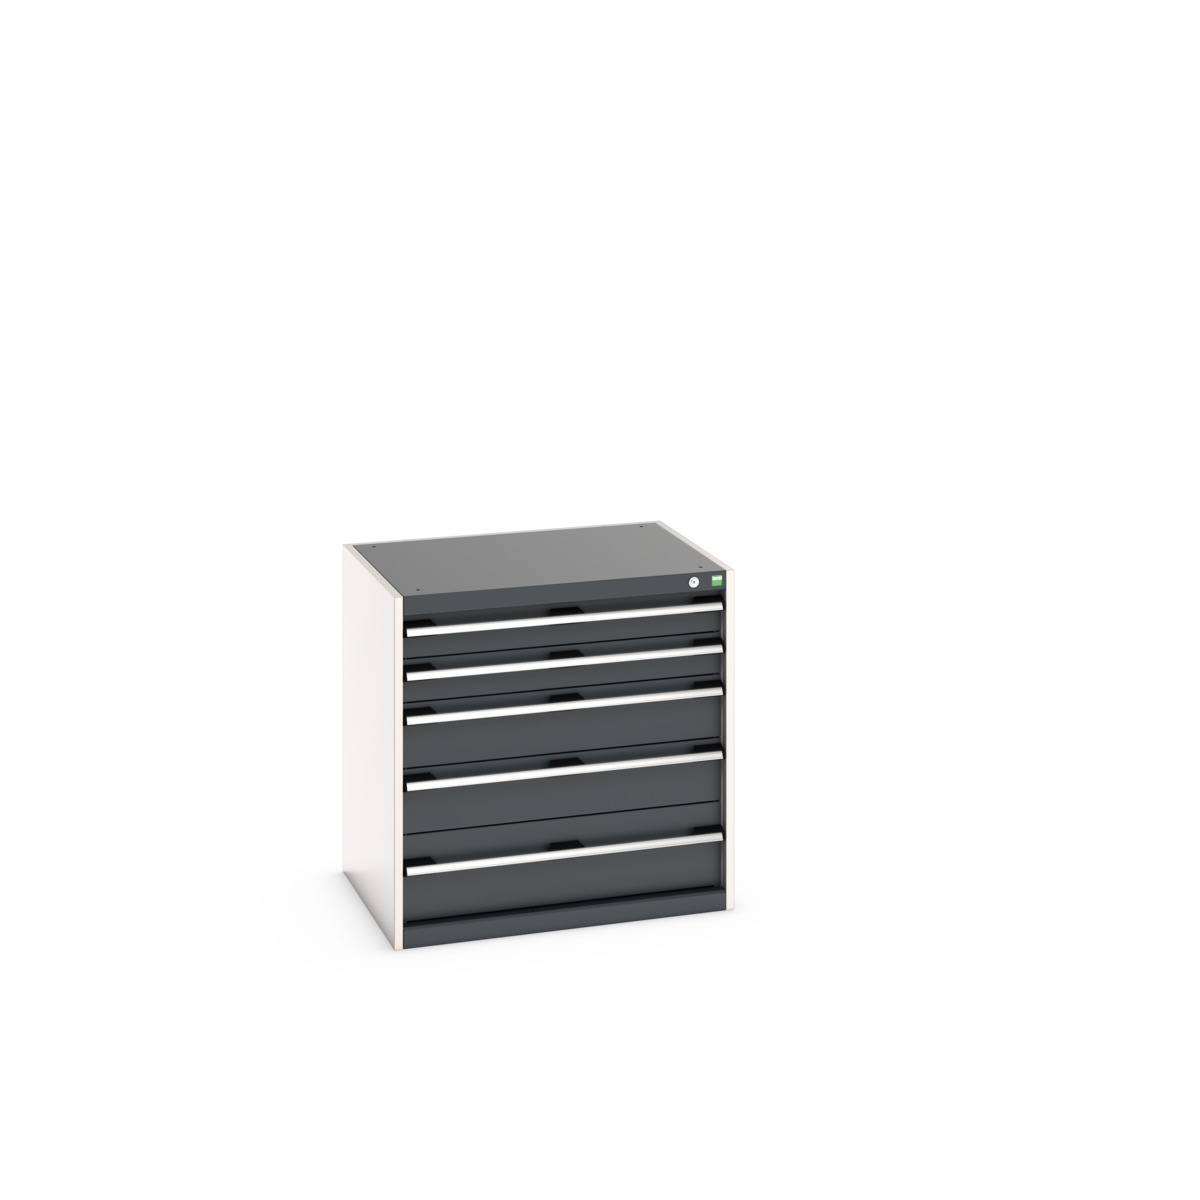 40020025. - cubio drawer cabinet